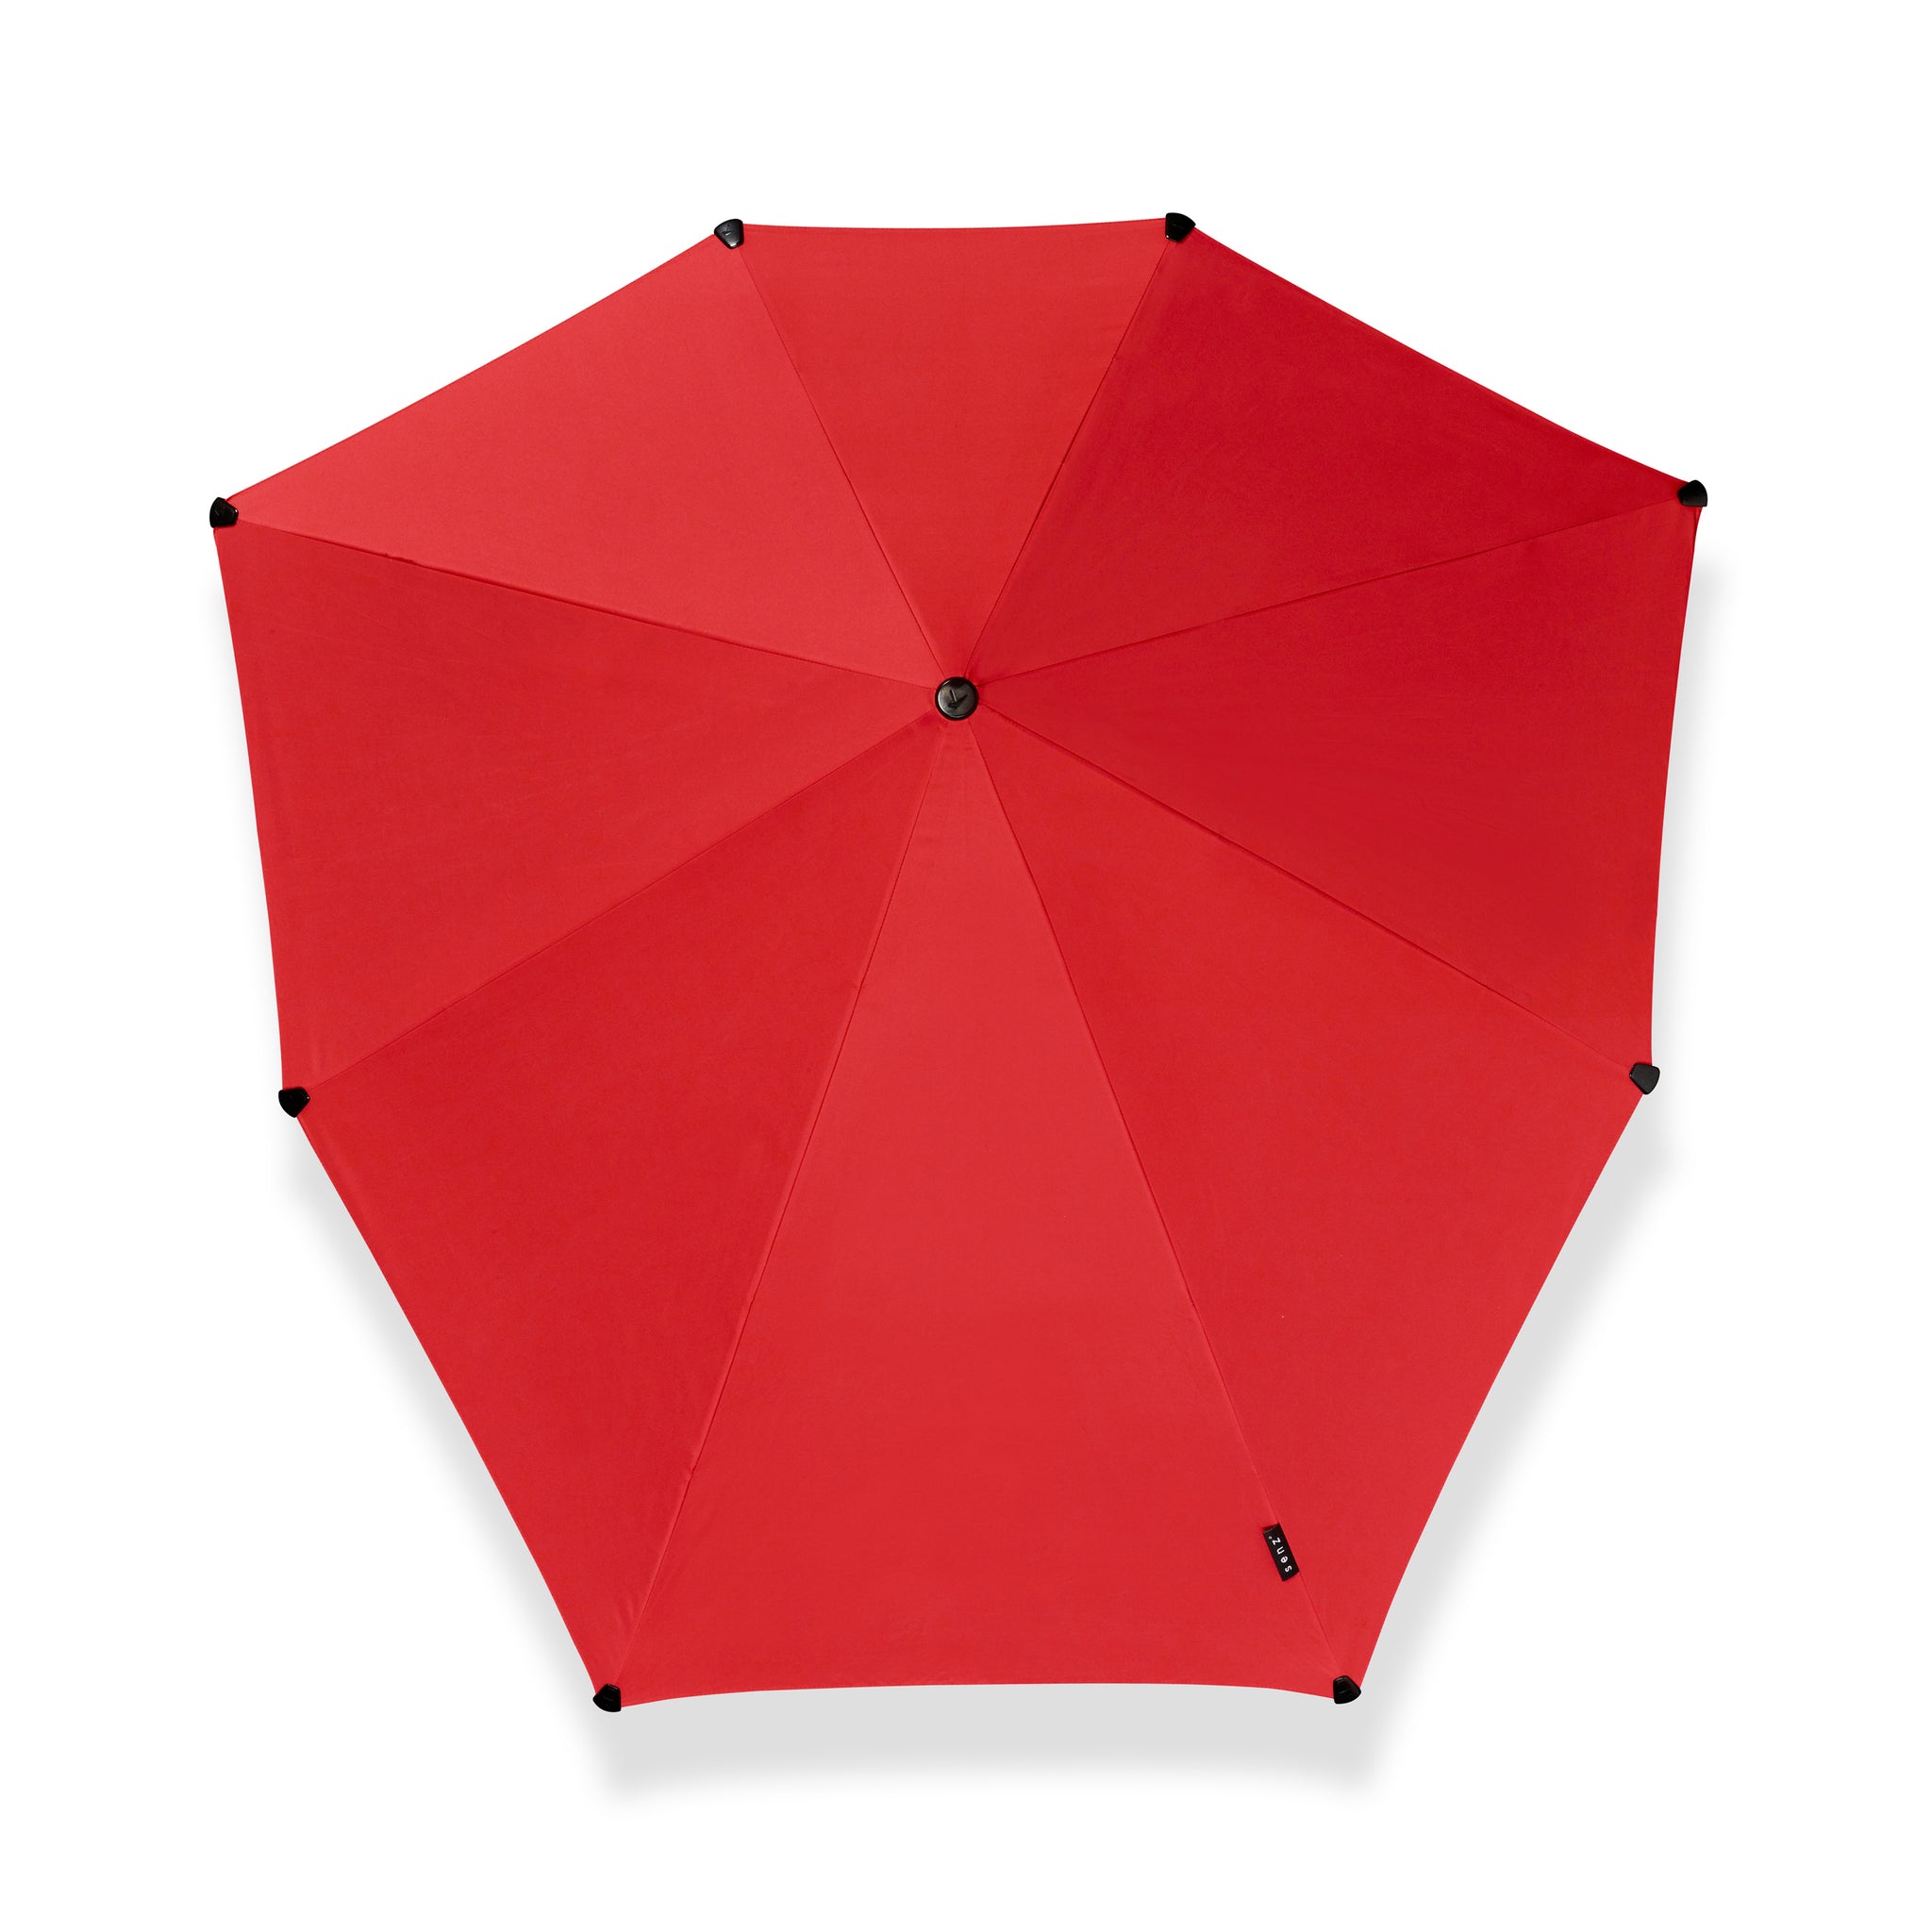 Senz Storm Paraplu Large│Passion Red│Senz Umbrella│product foto bovenkant